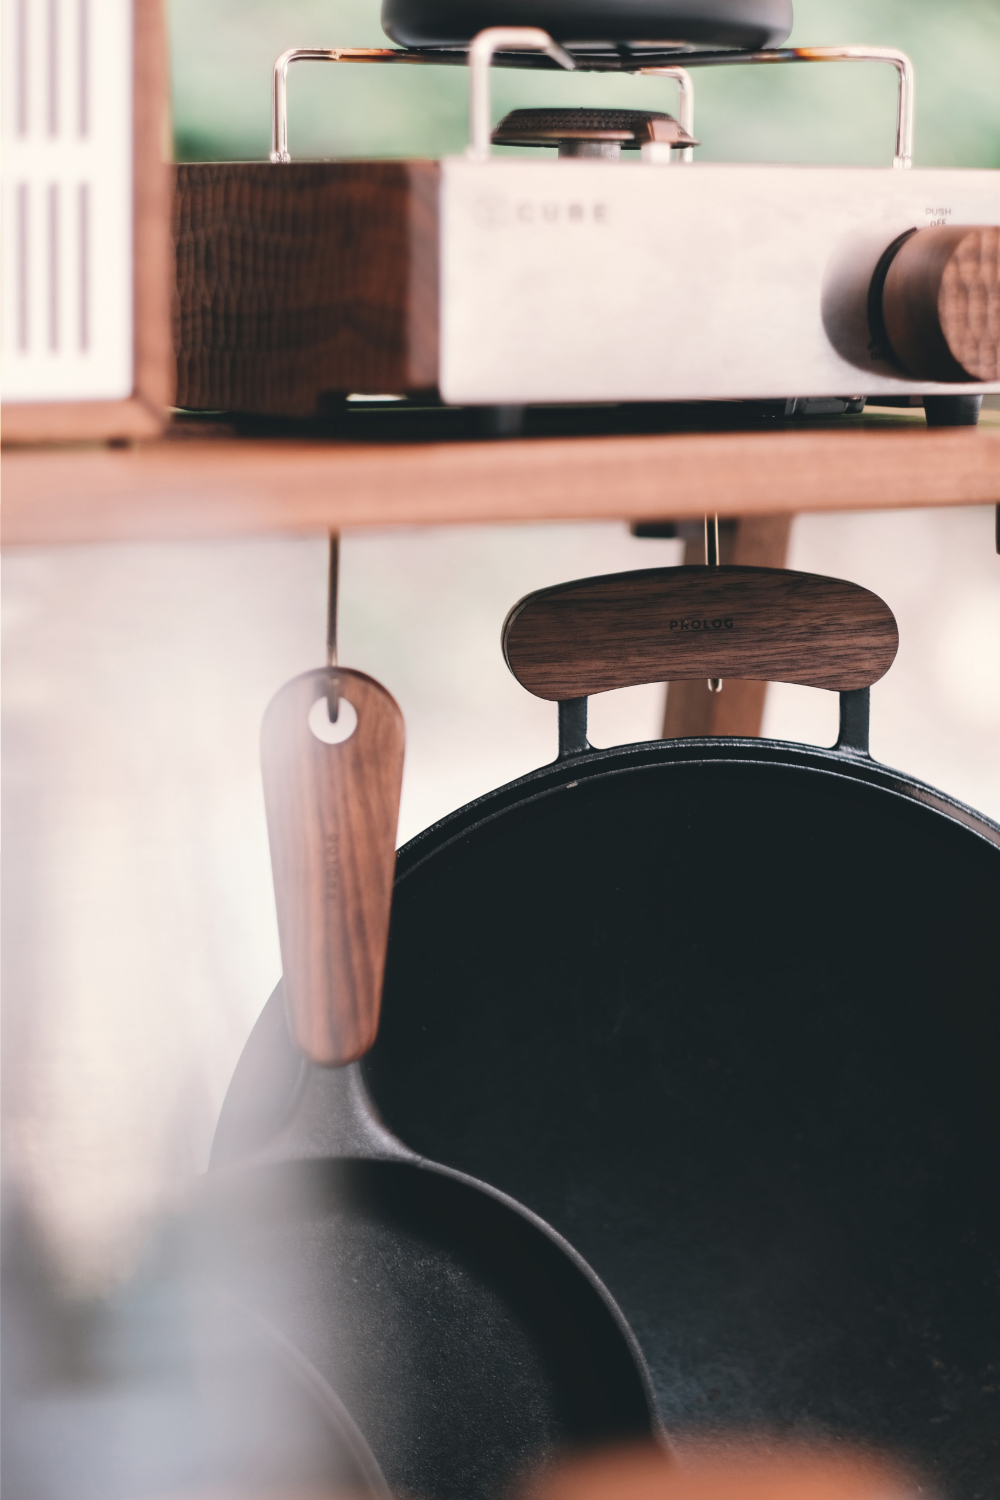 PROLOG Wooden Pan Handle for Lodge Cast Iron - PROLOG